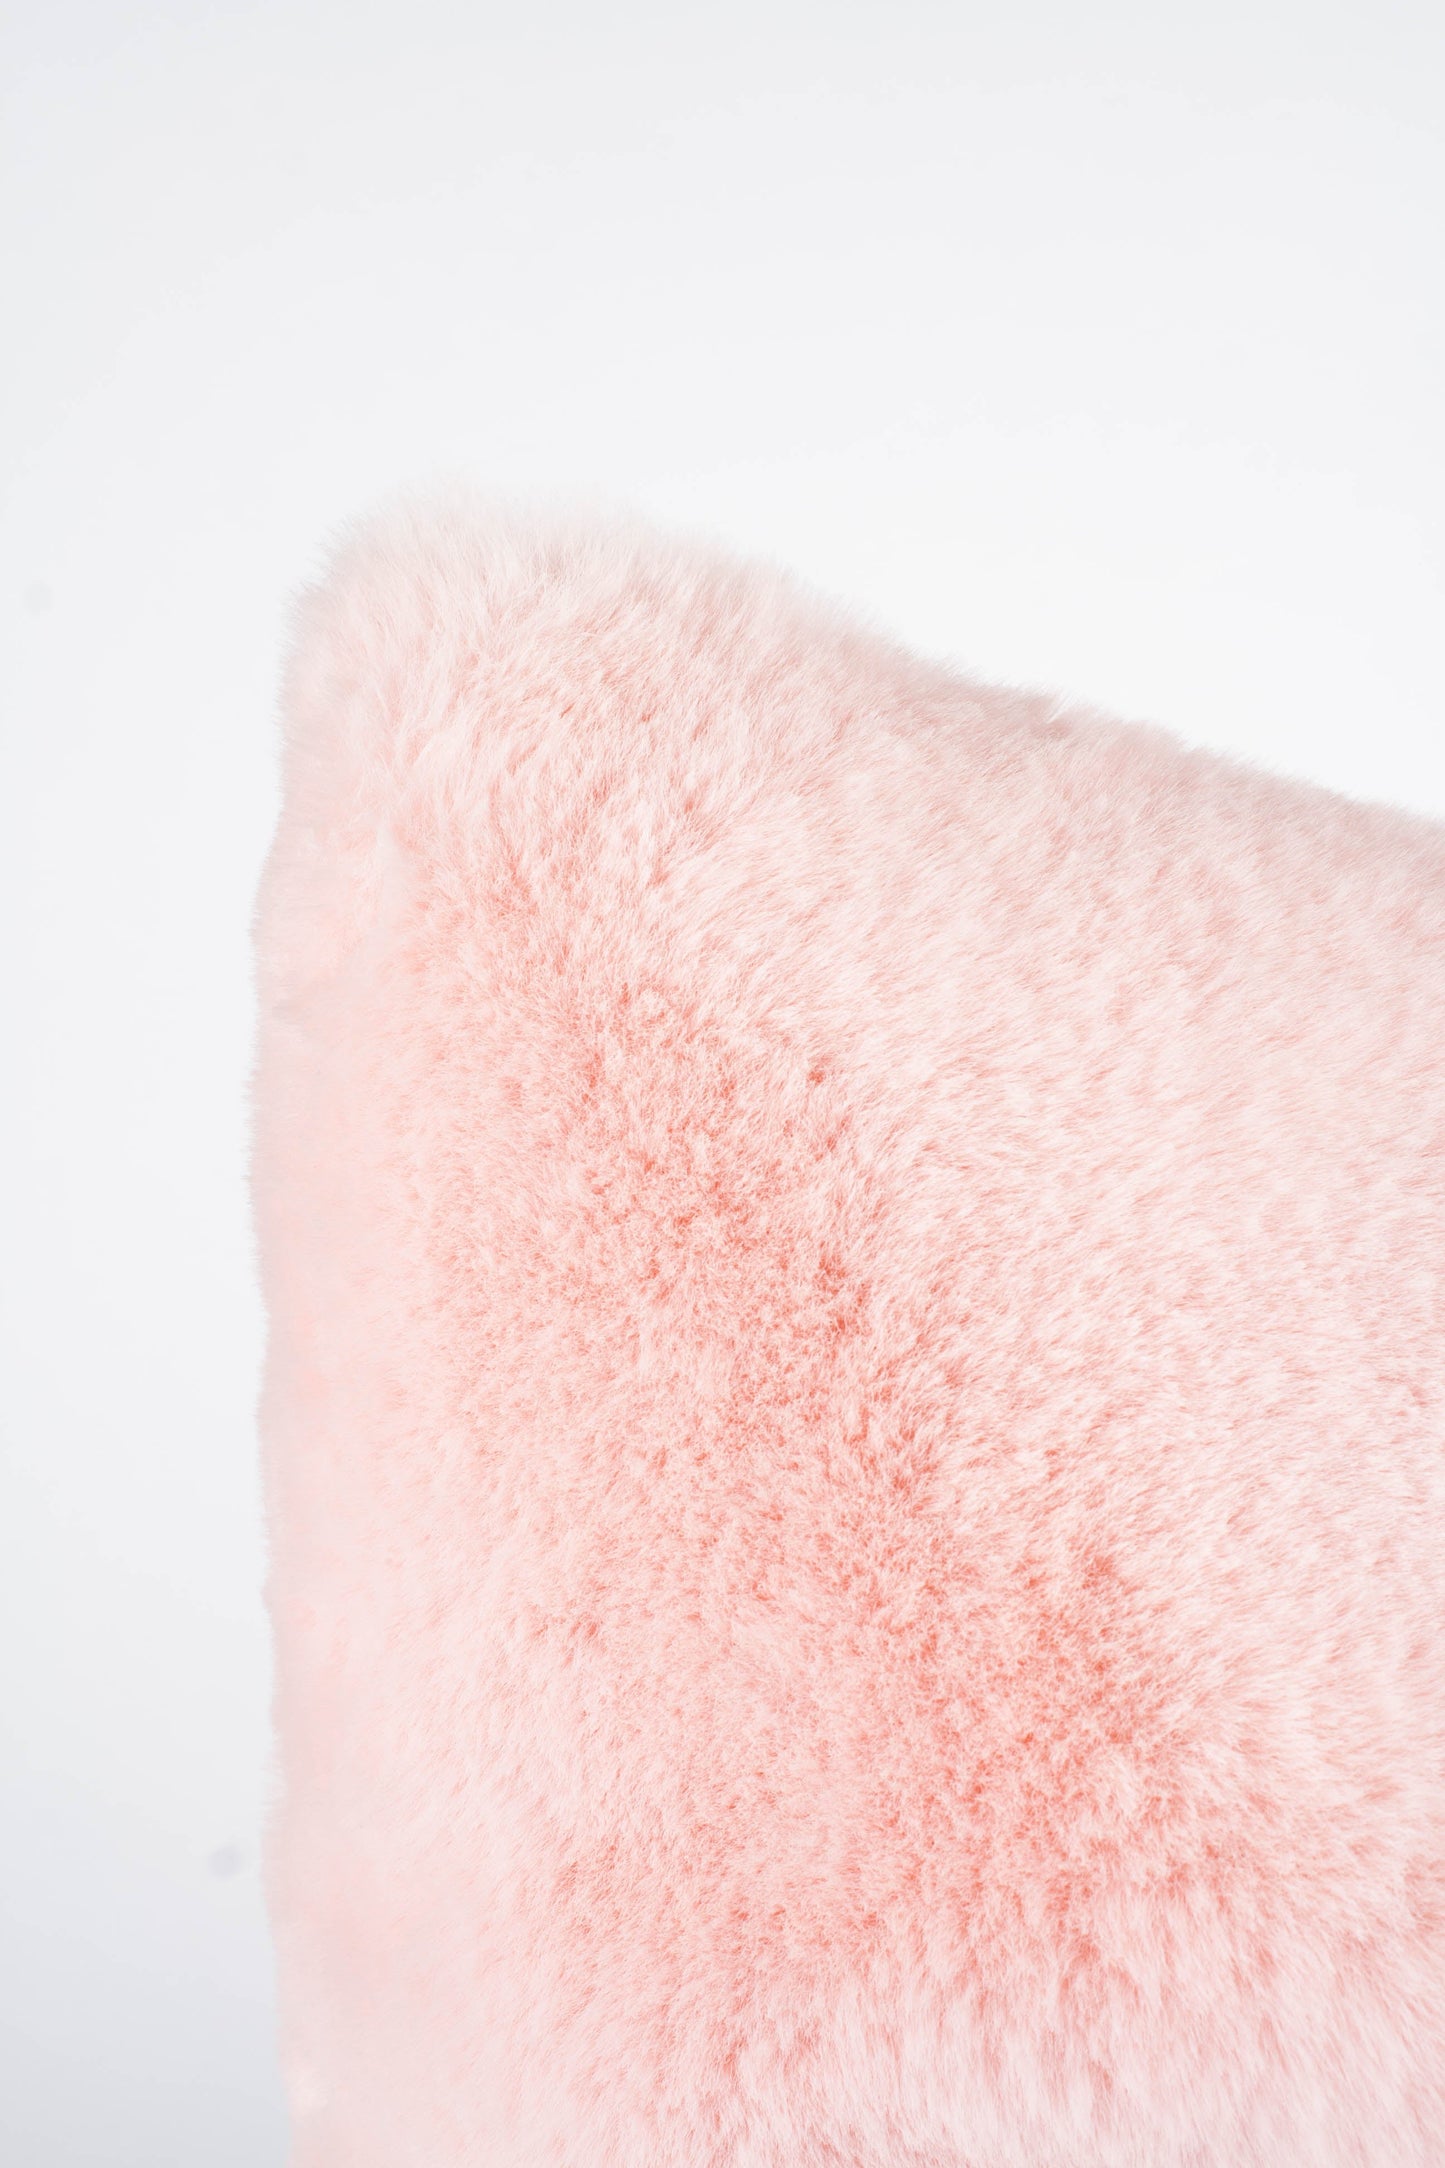 Soft Pink Furs